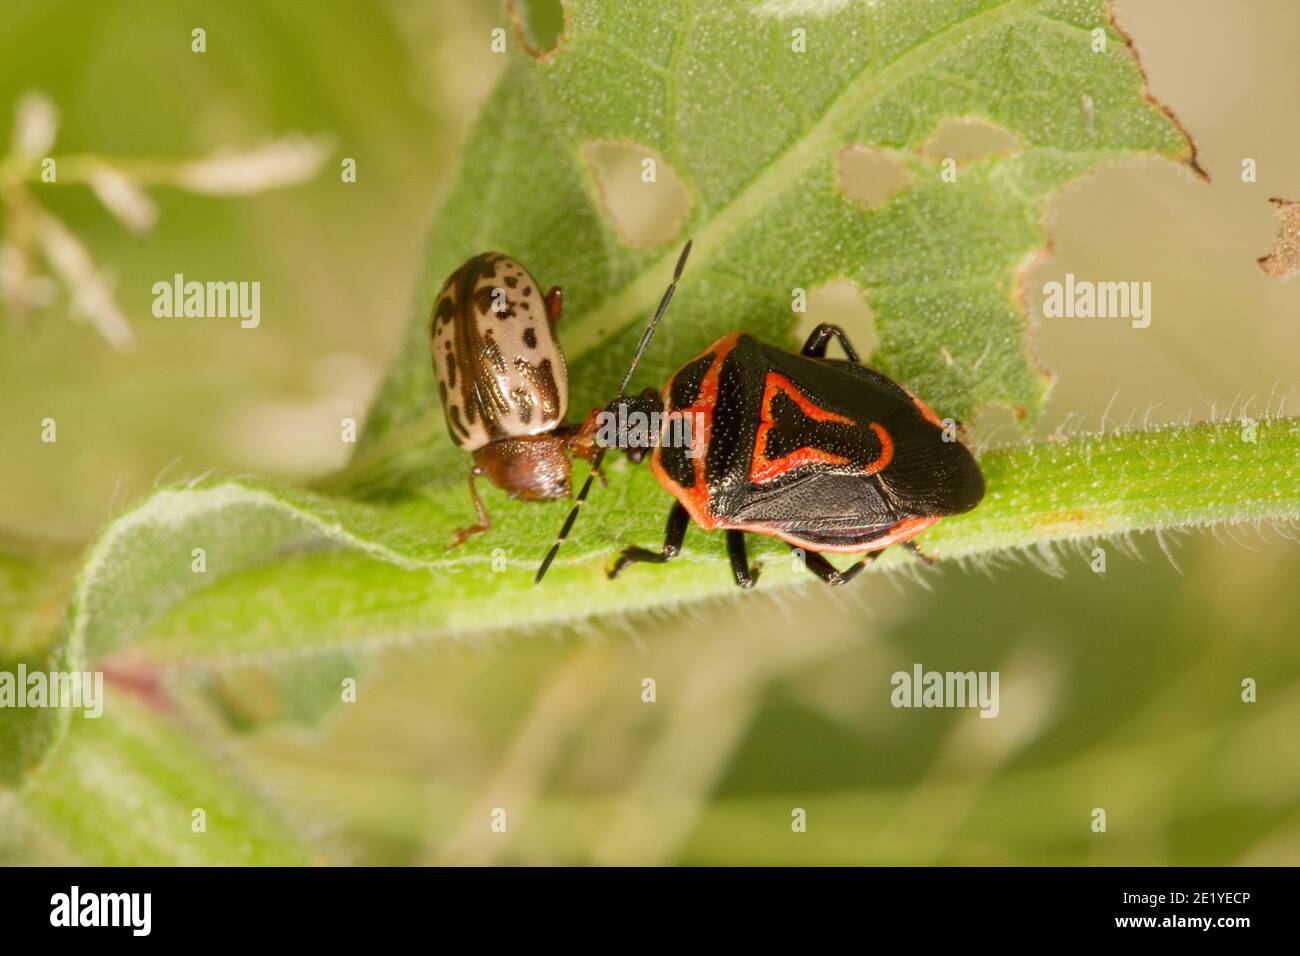 Two-spotted Stink Bug, Perillus bioculatus, Pentatomidae. Feeding on Leaf Beetle, Zygogramma piceicollis, Chrysomelidae. Stock Photo